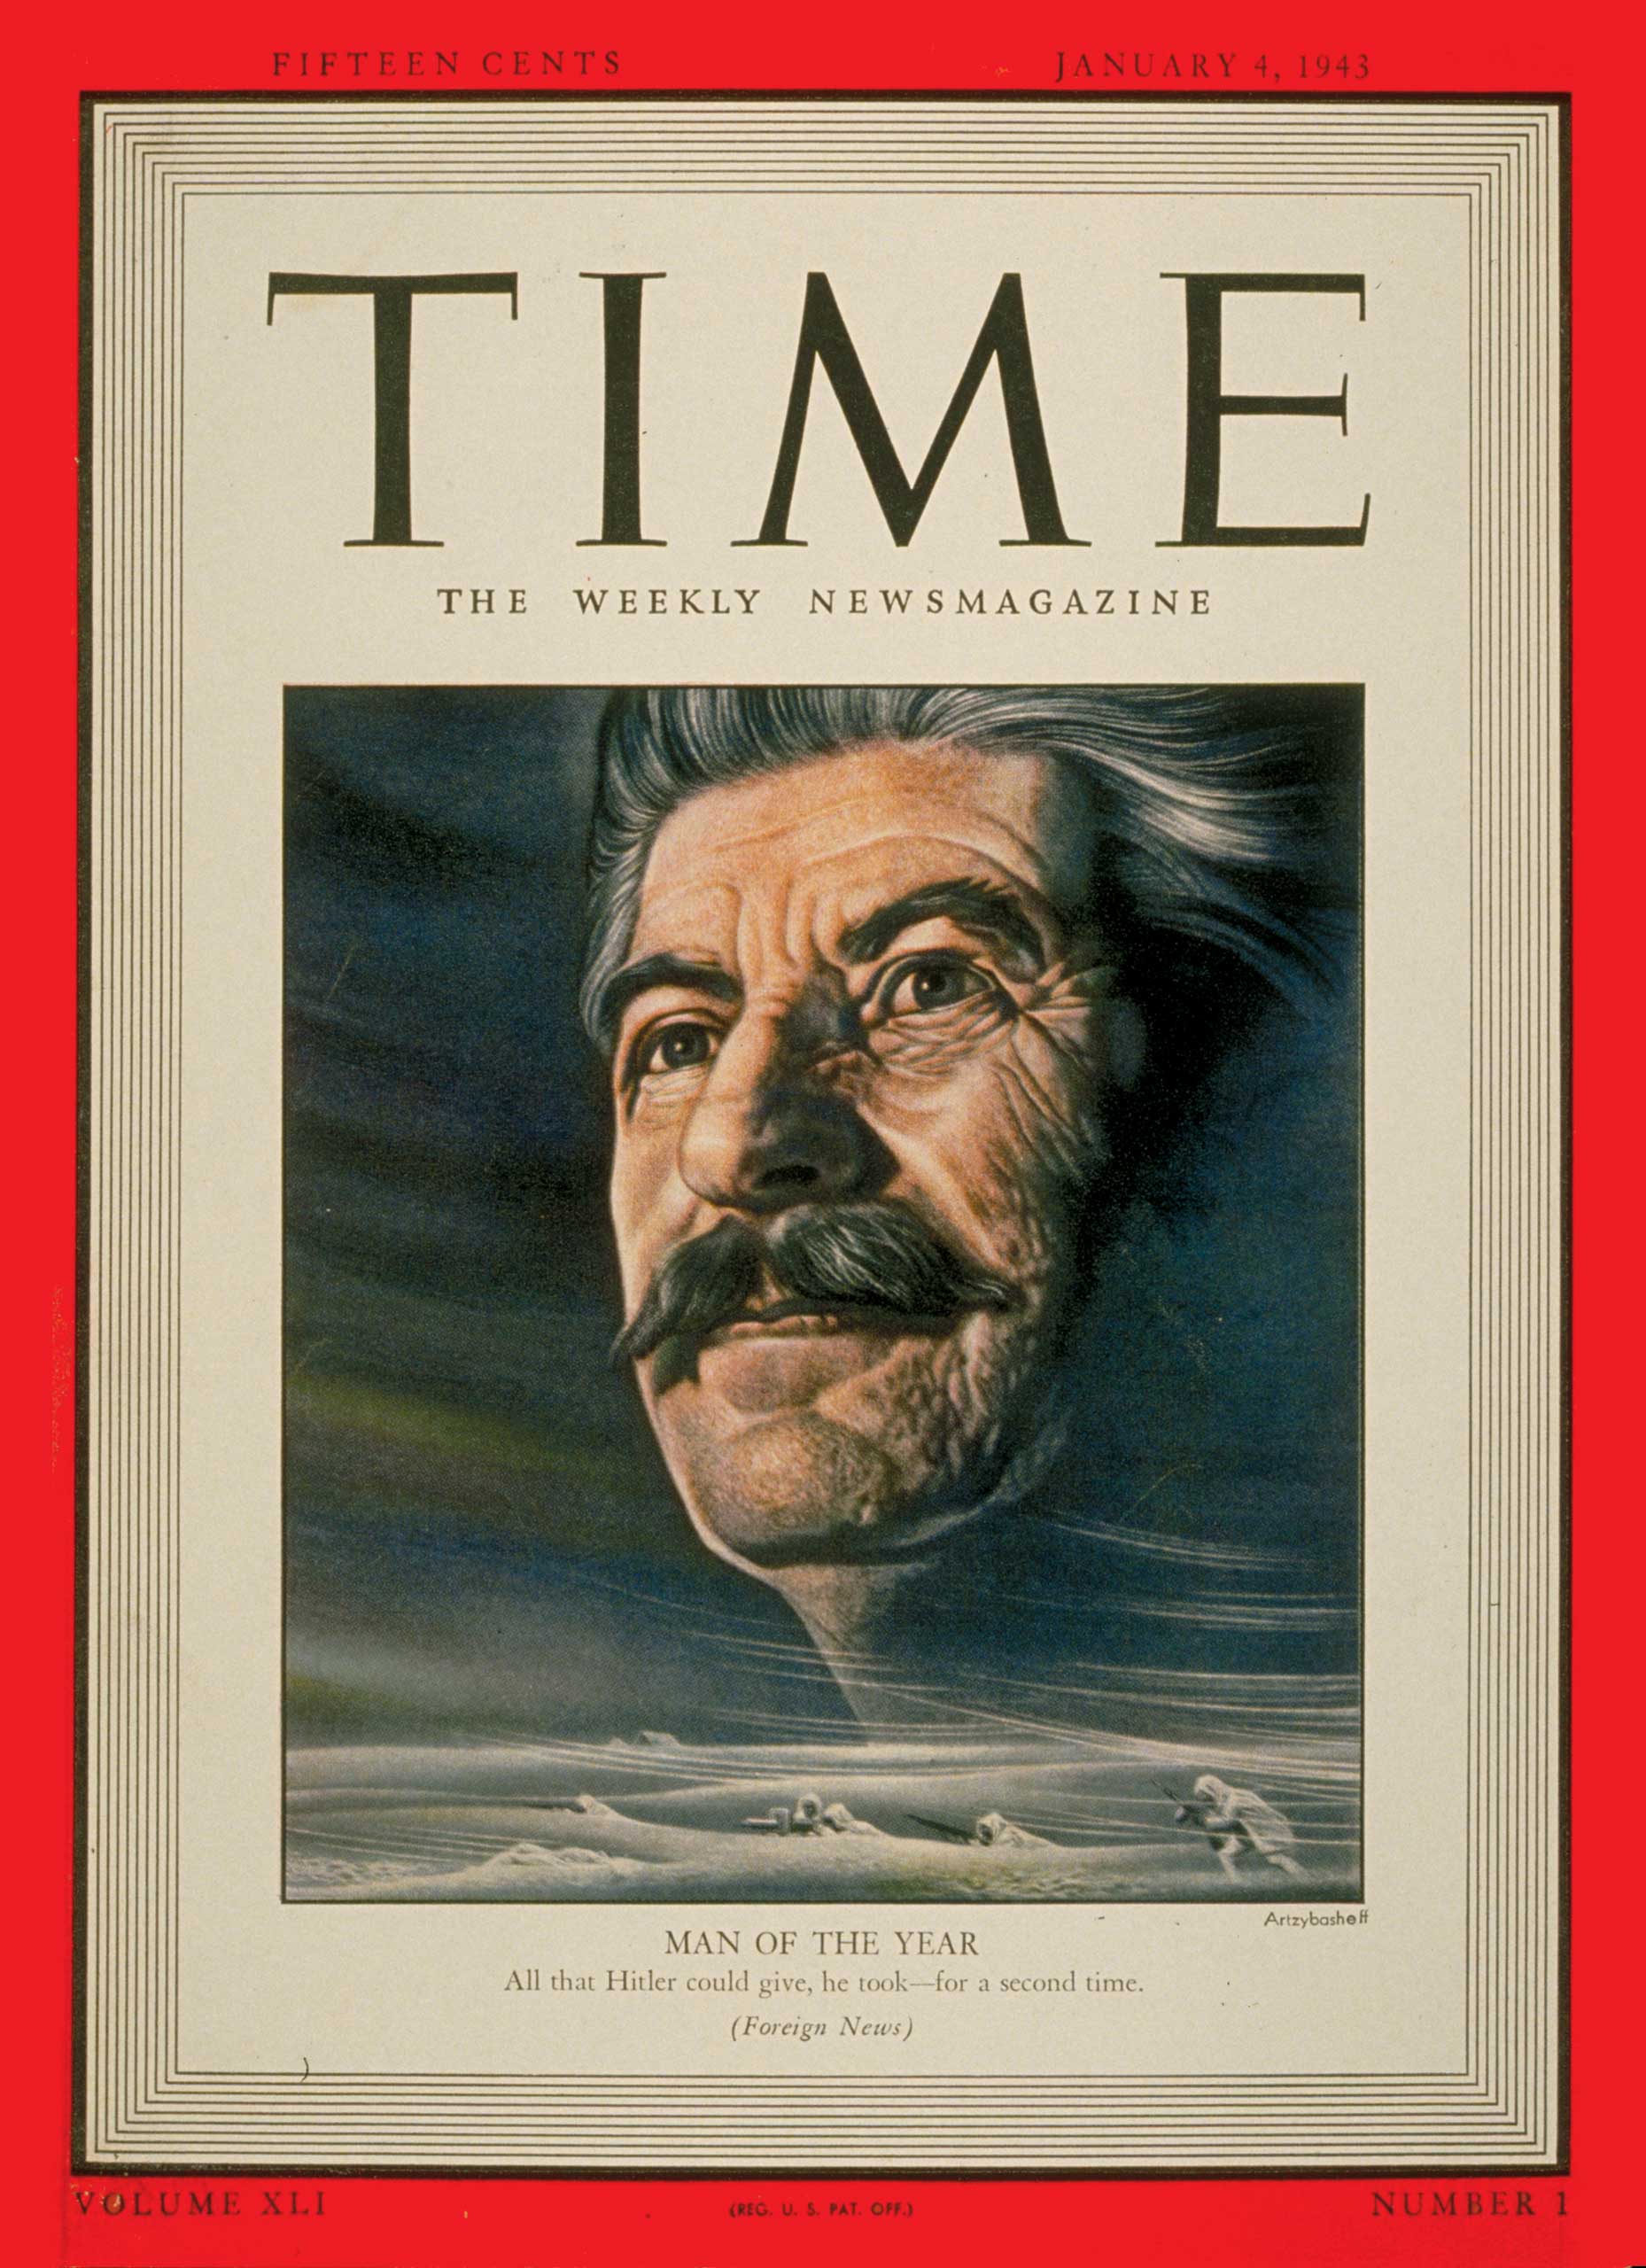 1942: Joseph Stalin